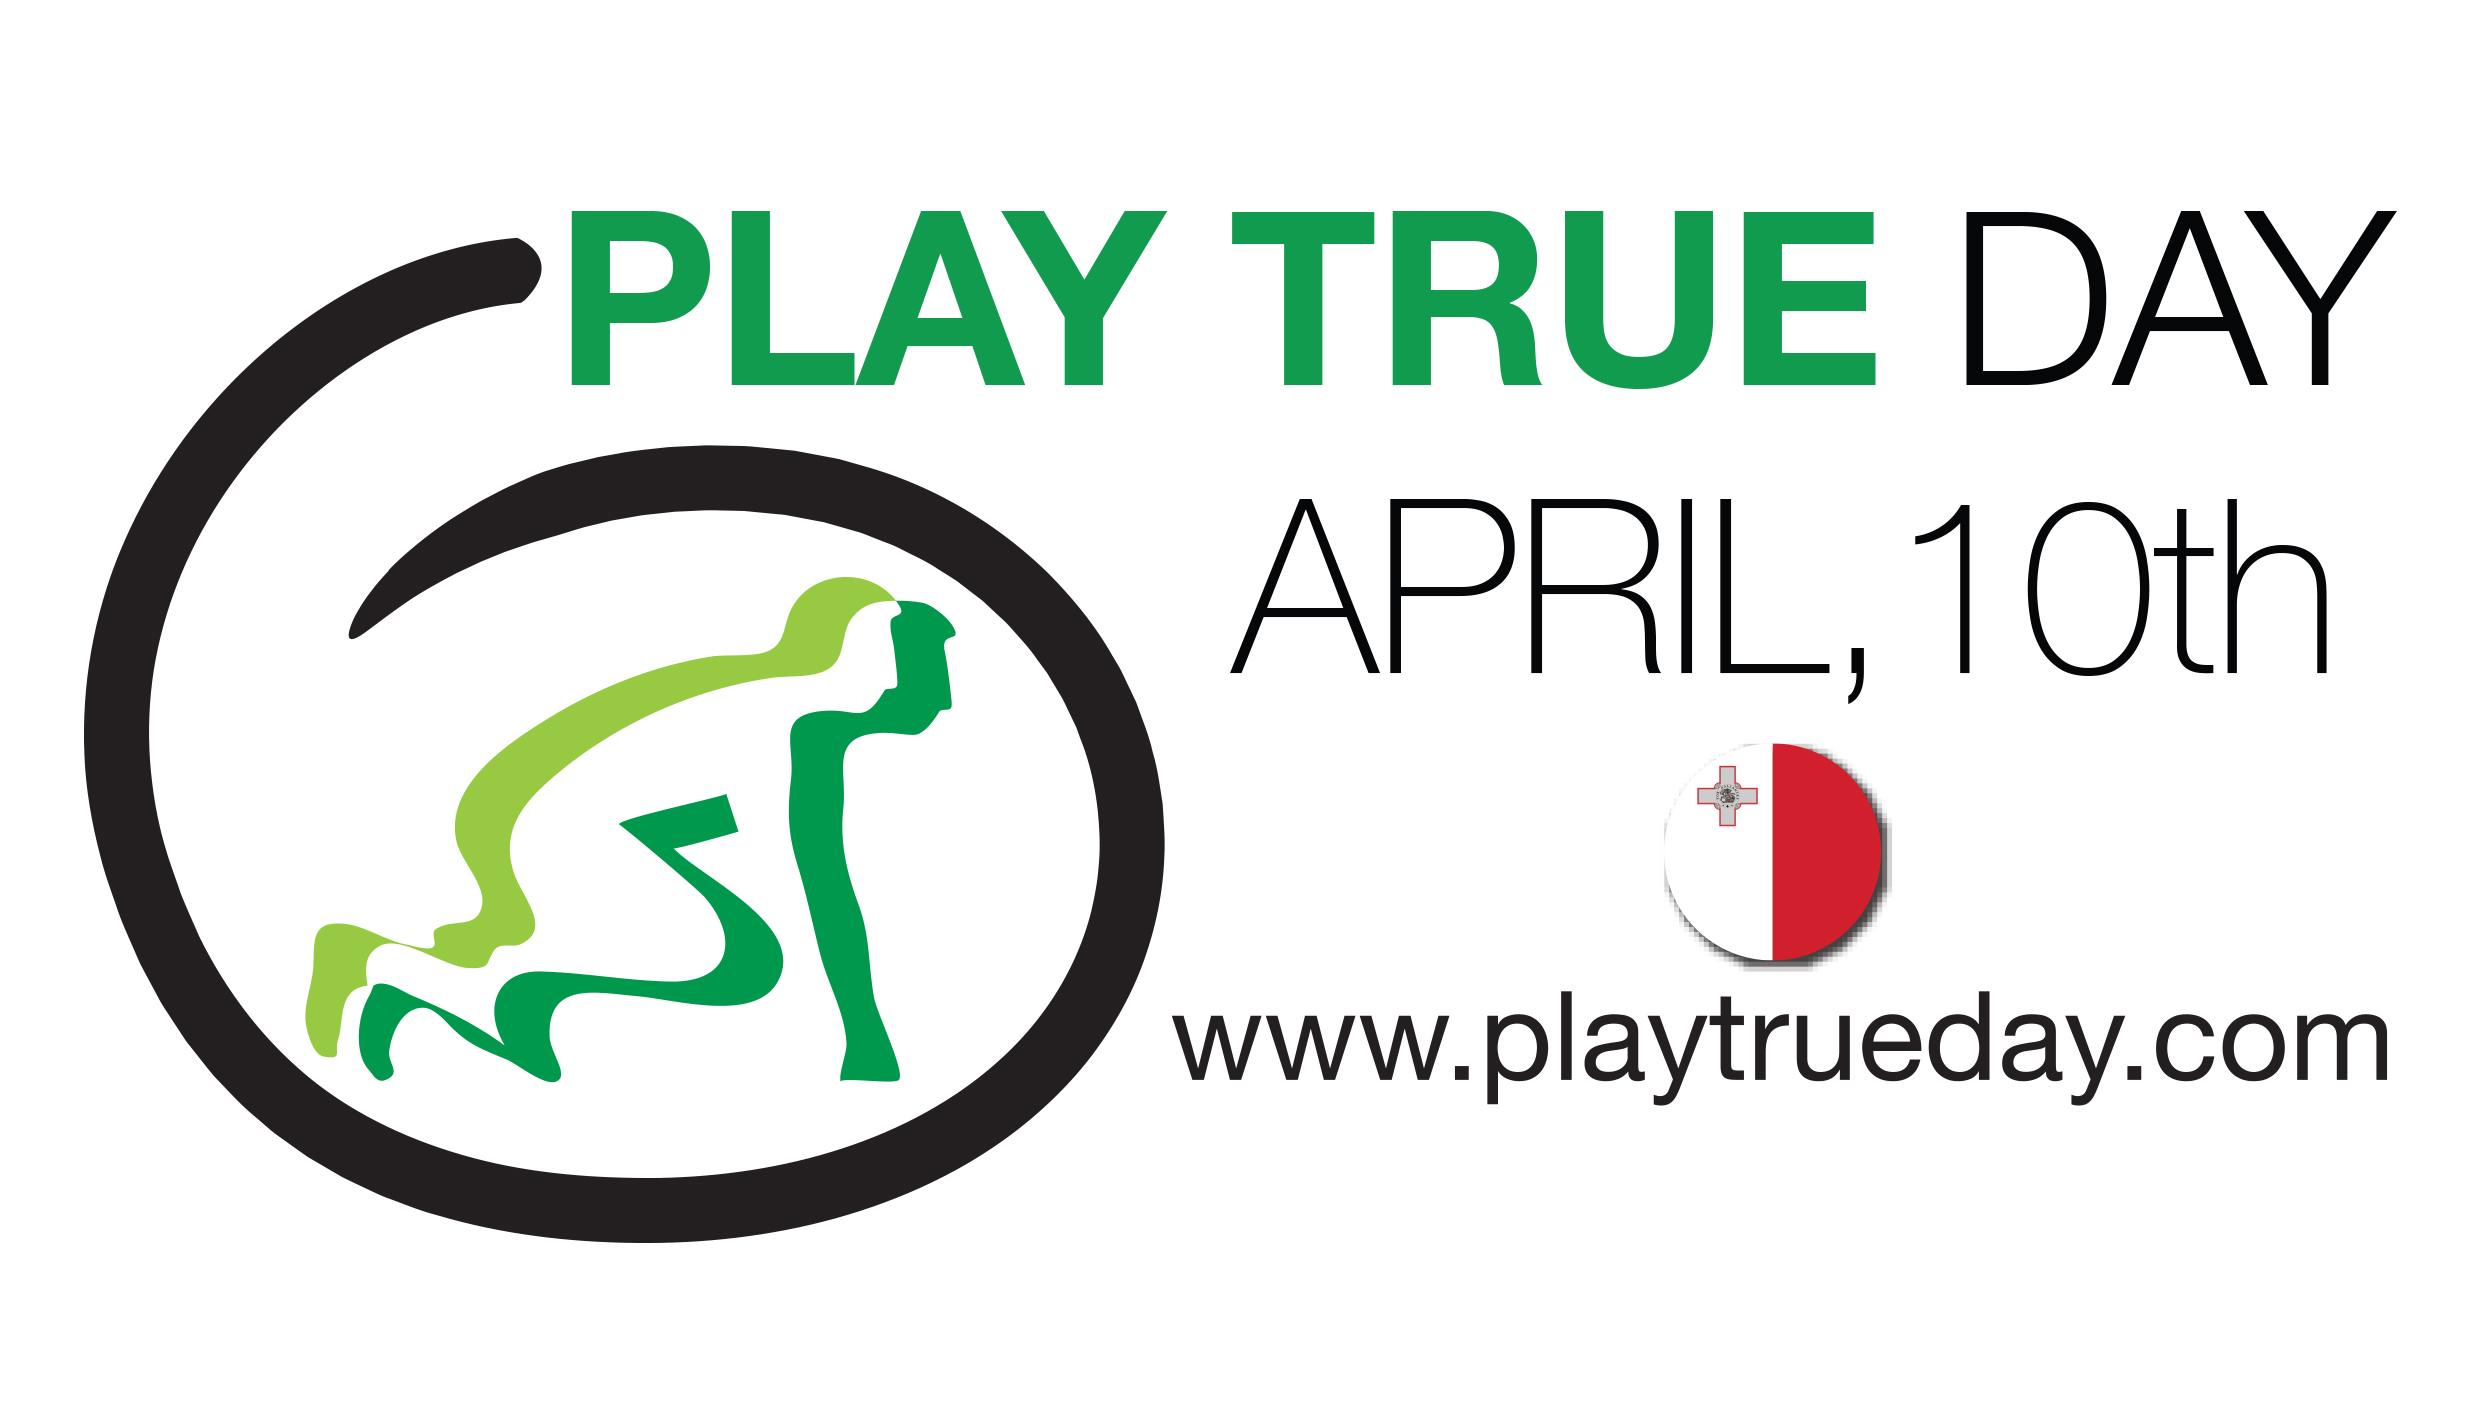 True player games. Play true. Wada Play true. Play true антидопинг логотип. Play true Day logo.